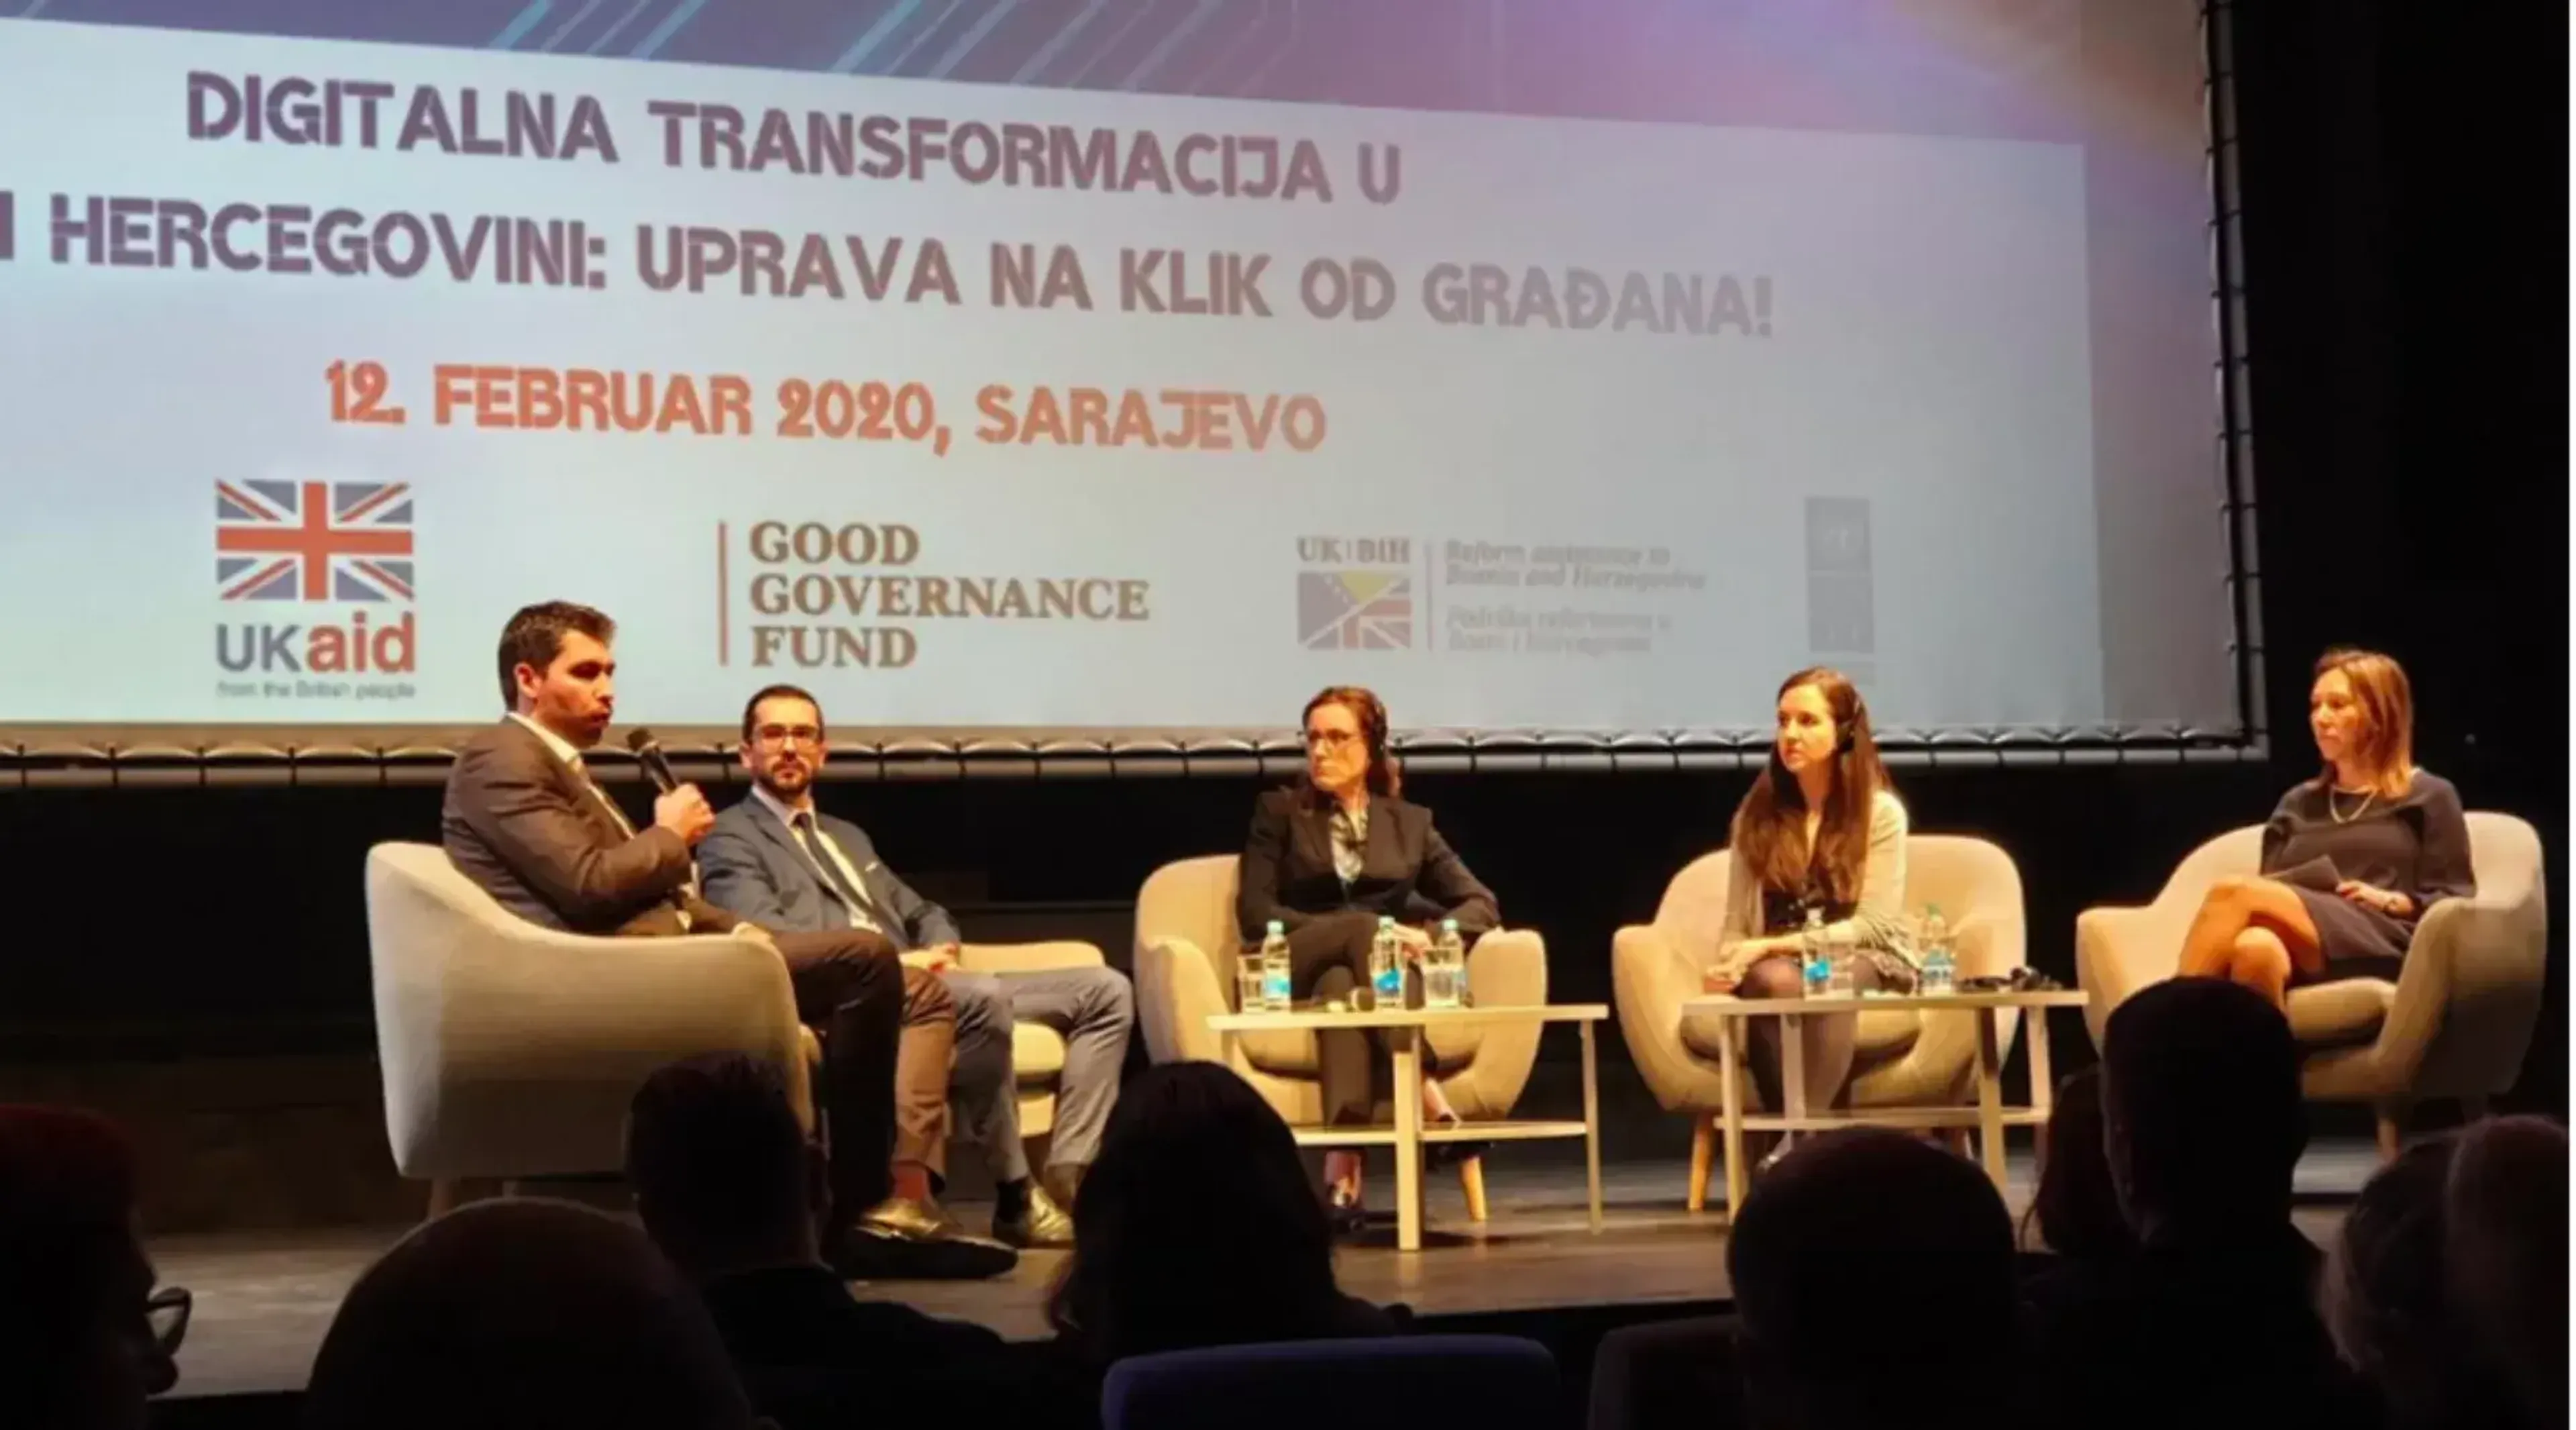 vent on digital transformation in Bosnia and Herzegovina